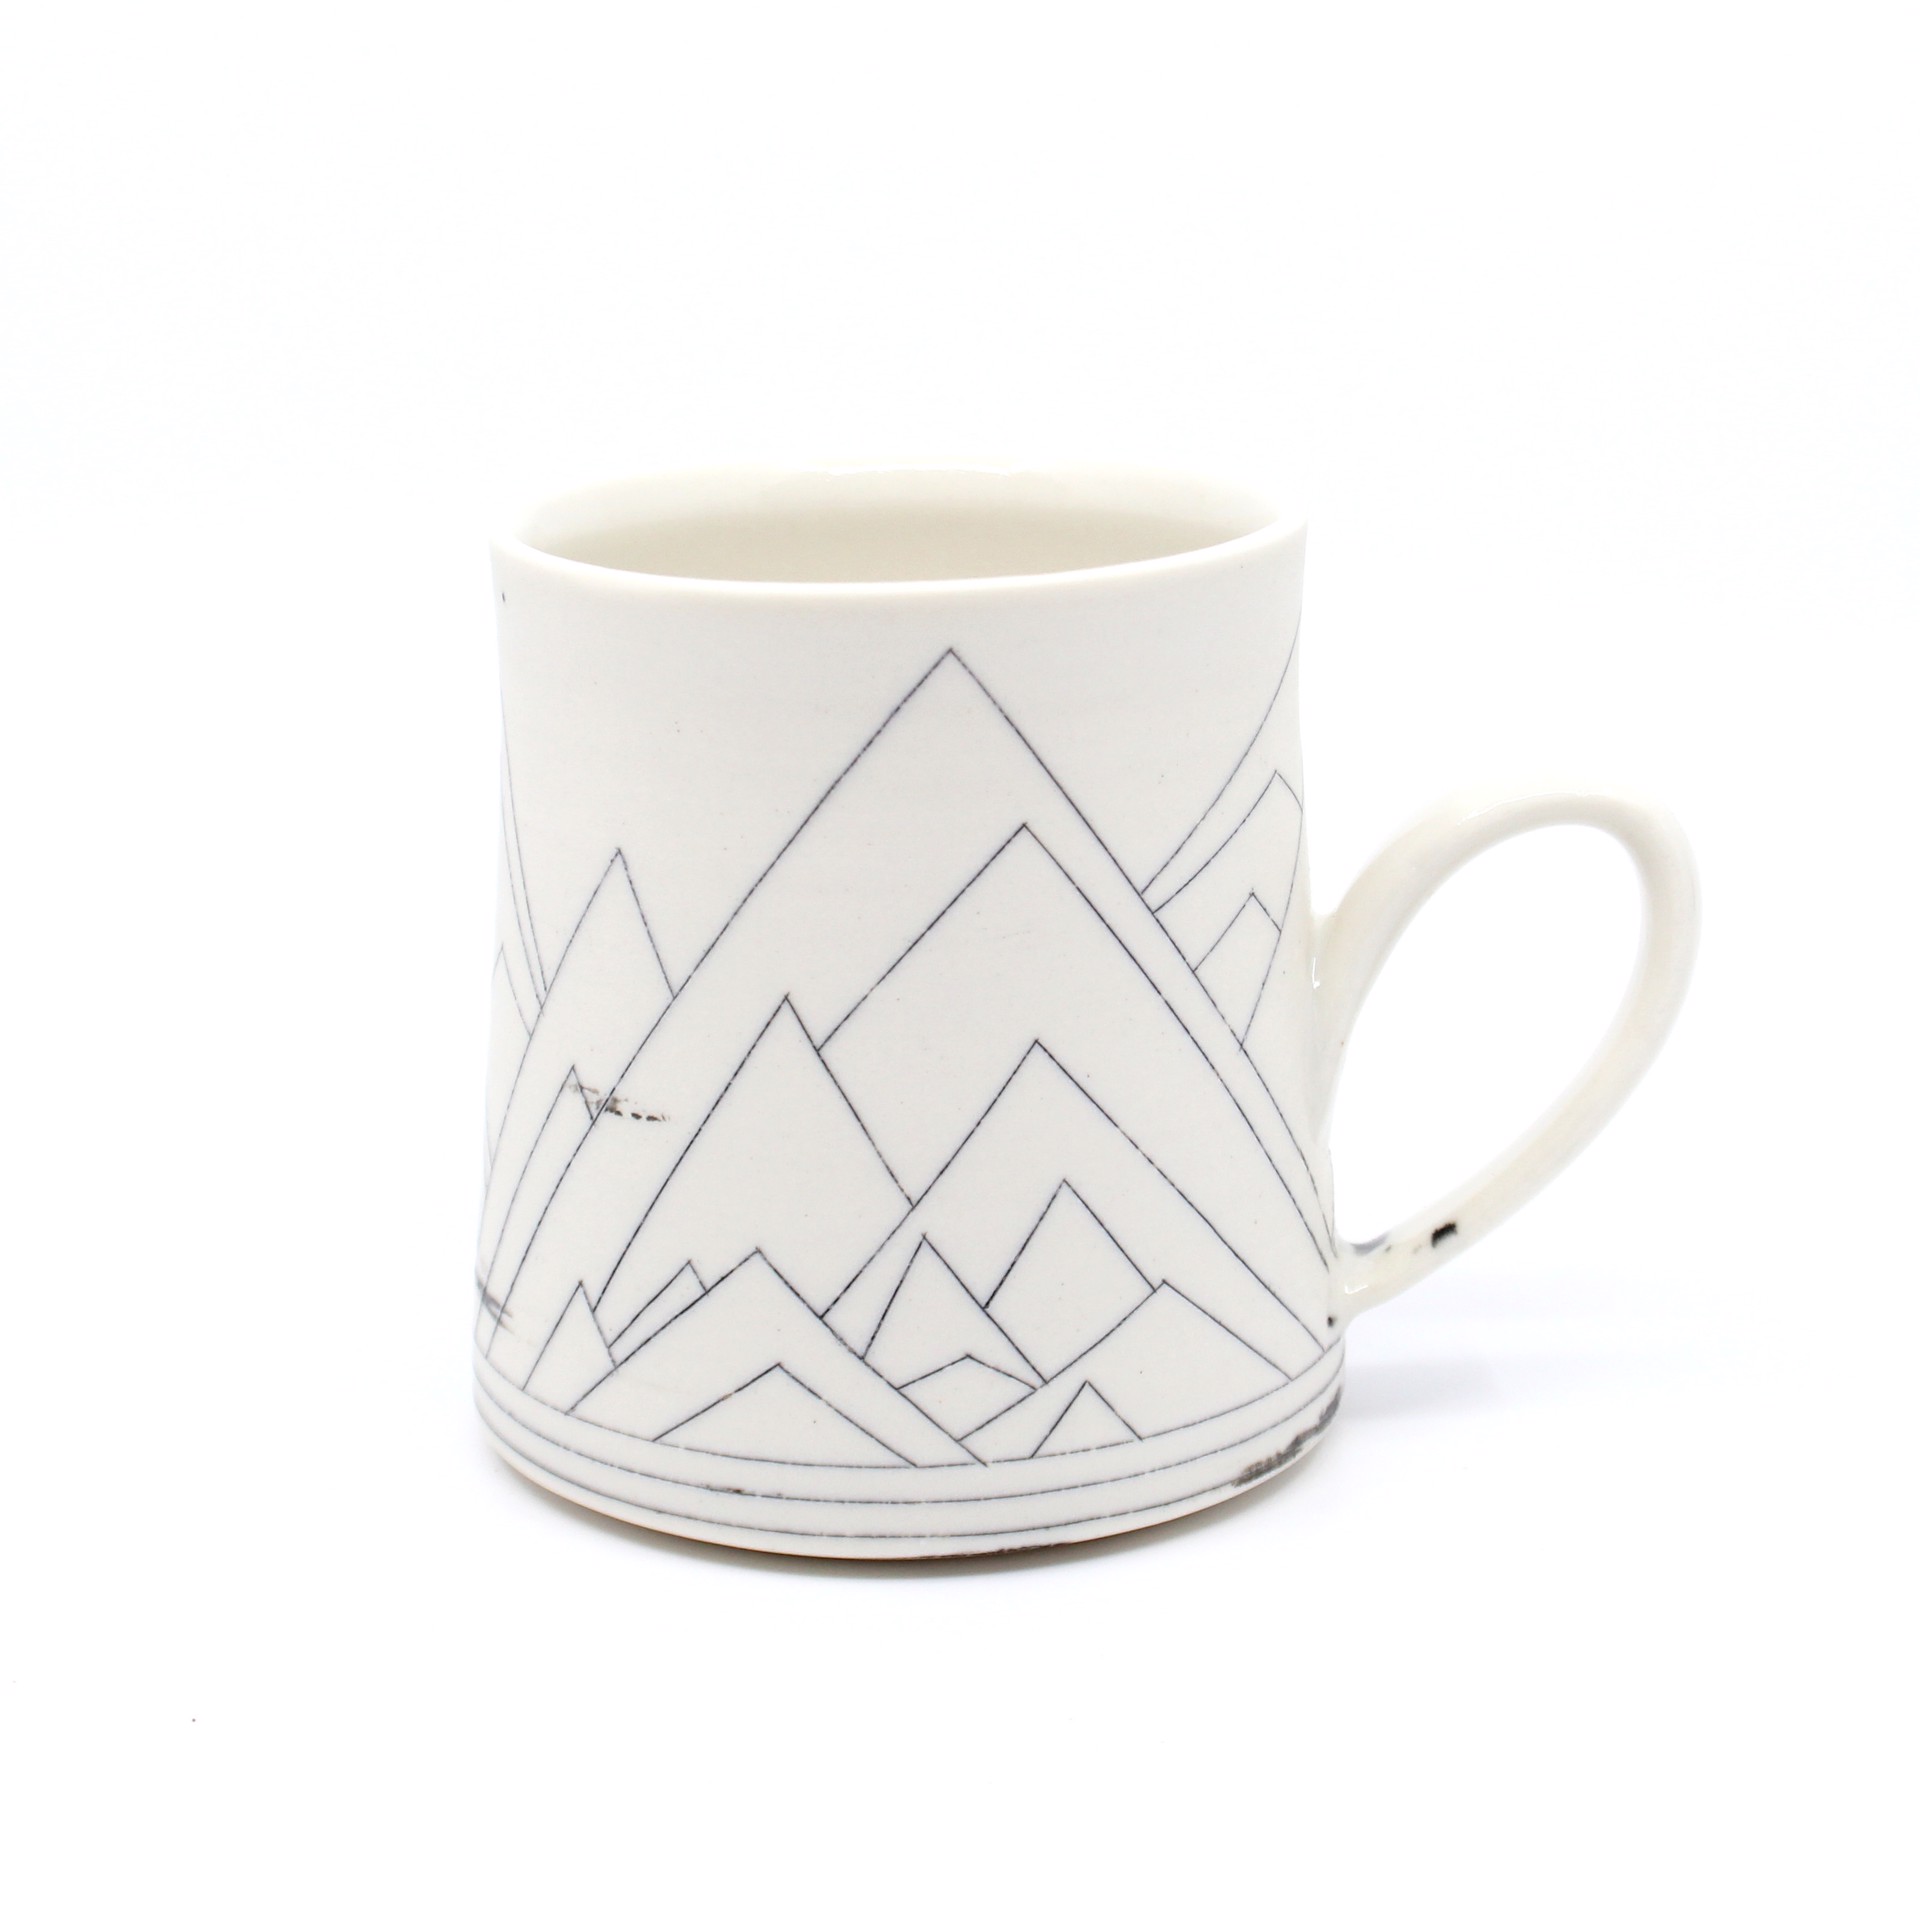 Mountain Mug by Bianka Groves